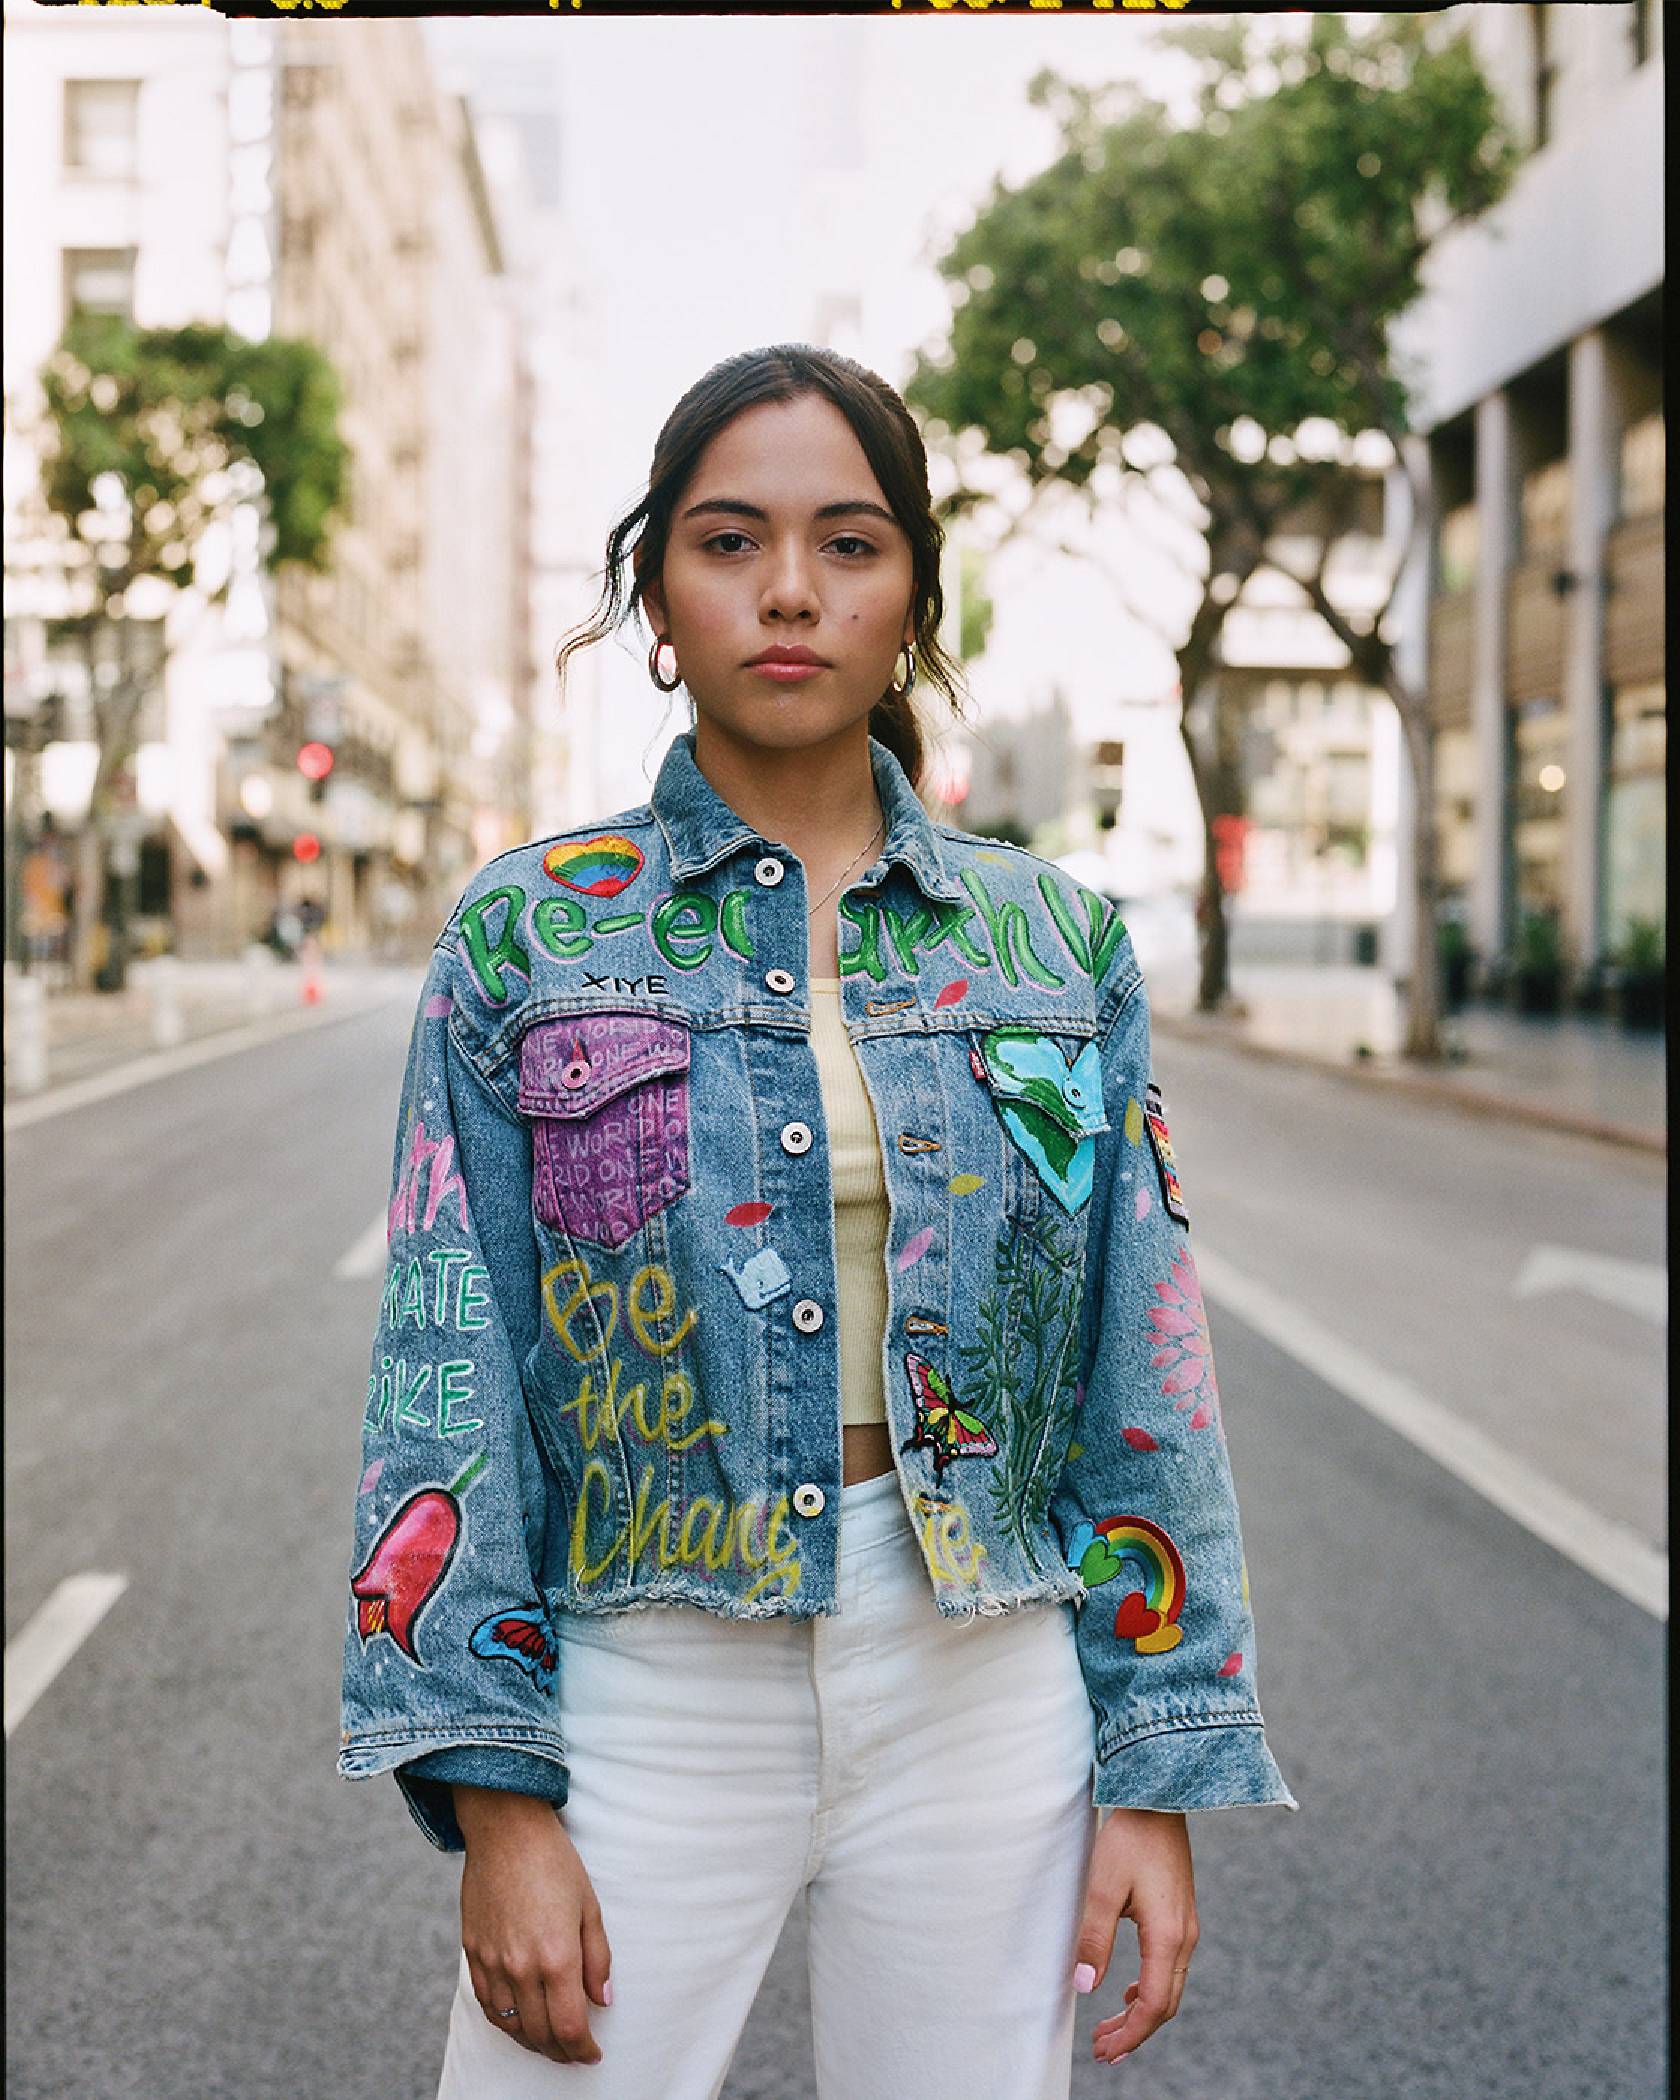 Xiye standing in the street in her custom Levi's trucker jacket